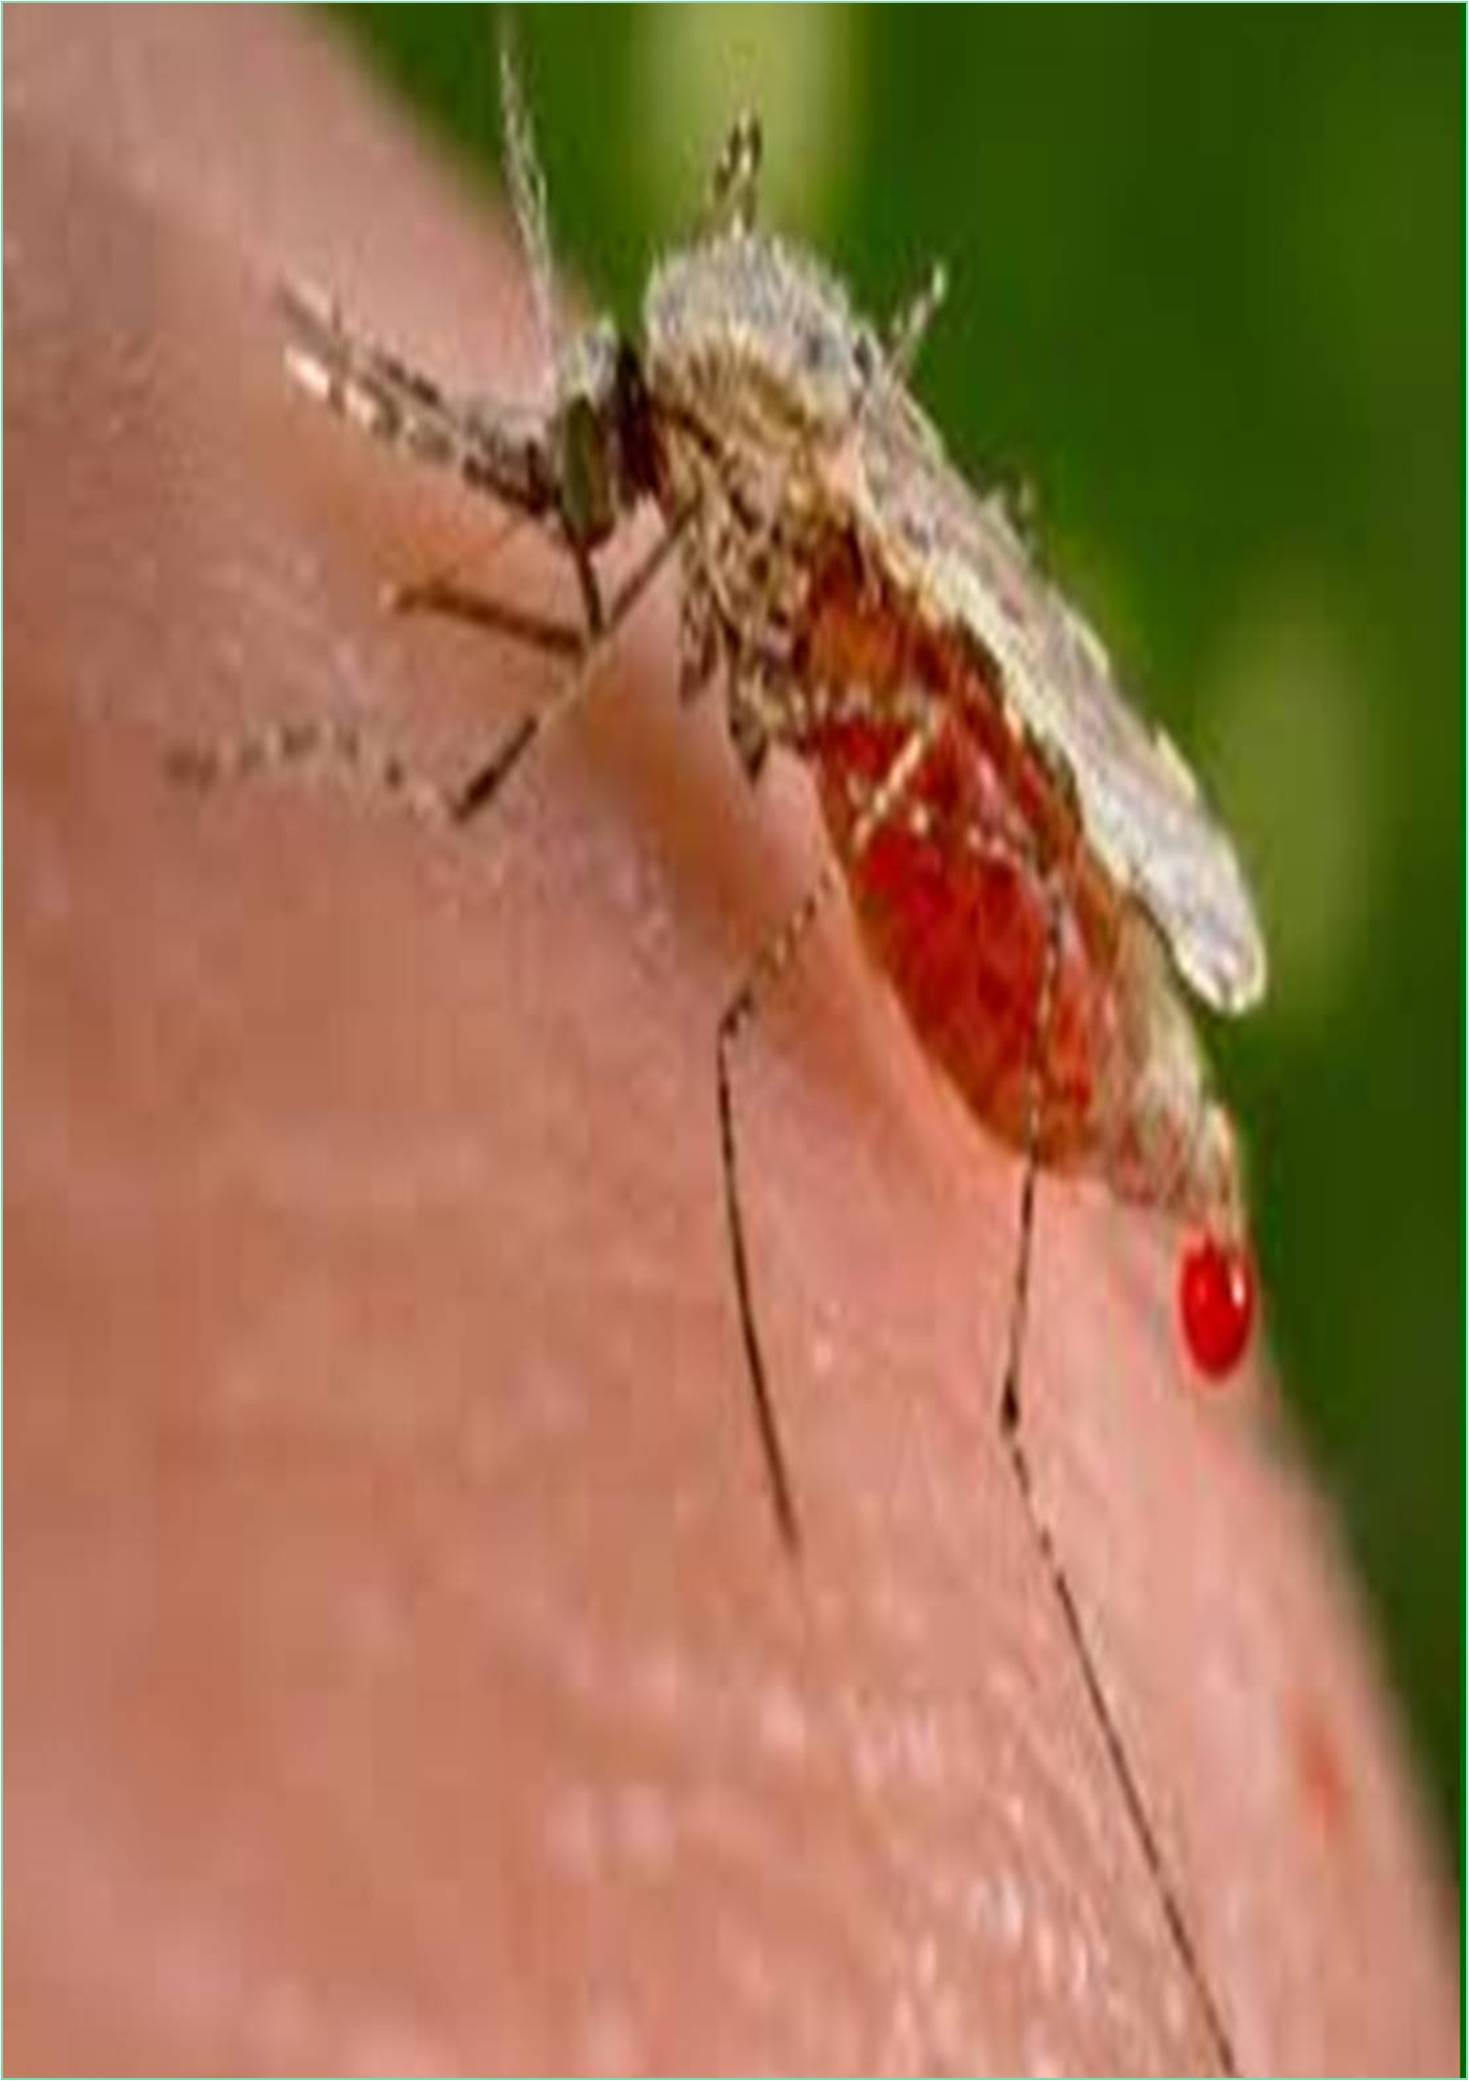 international-journal-of-malaria-and-antimalaria-research-banner.jpg